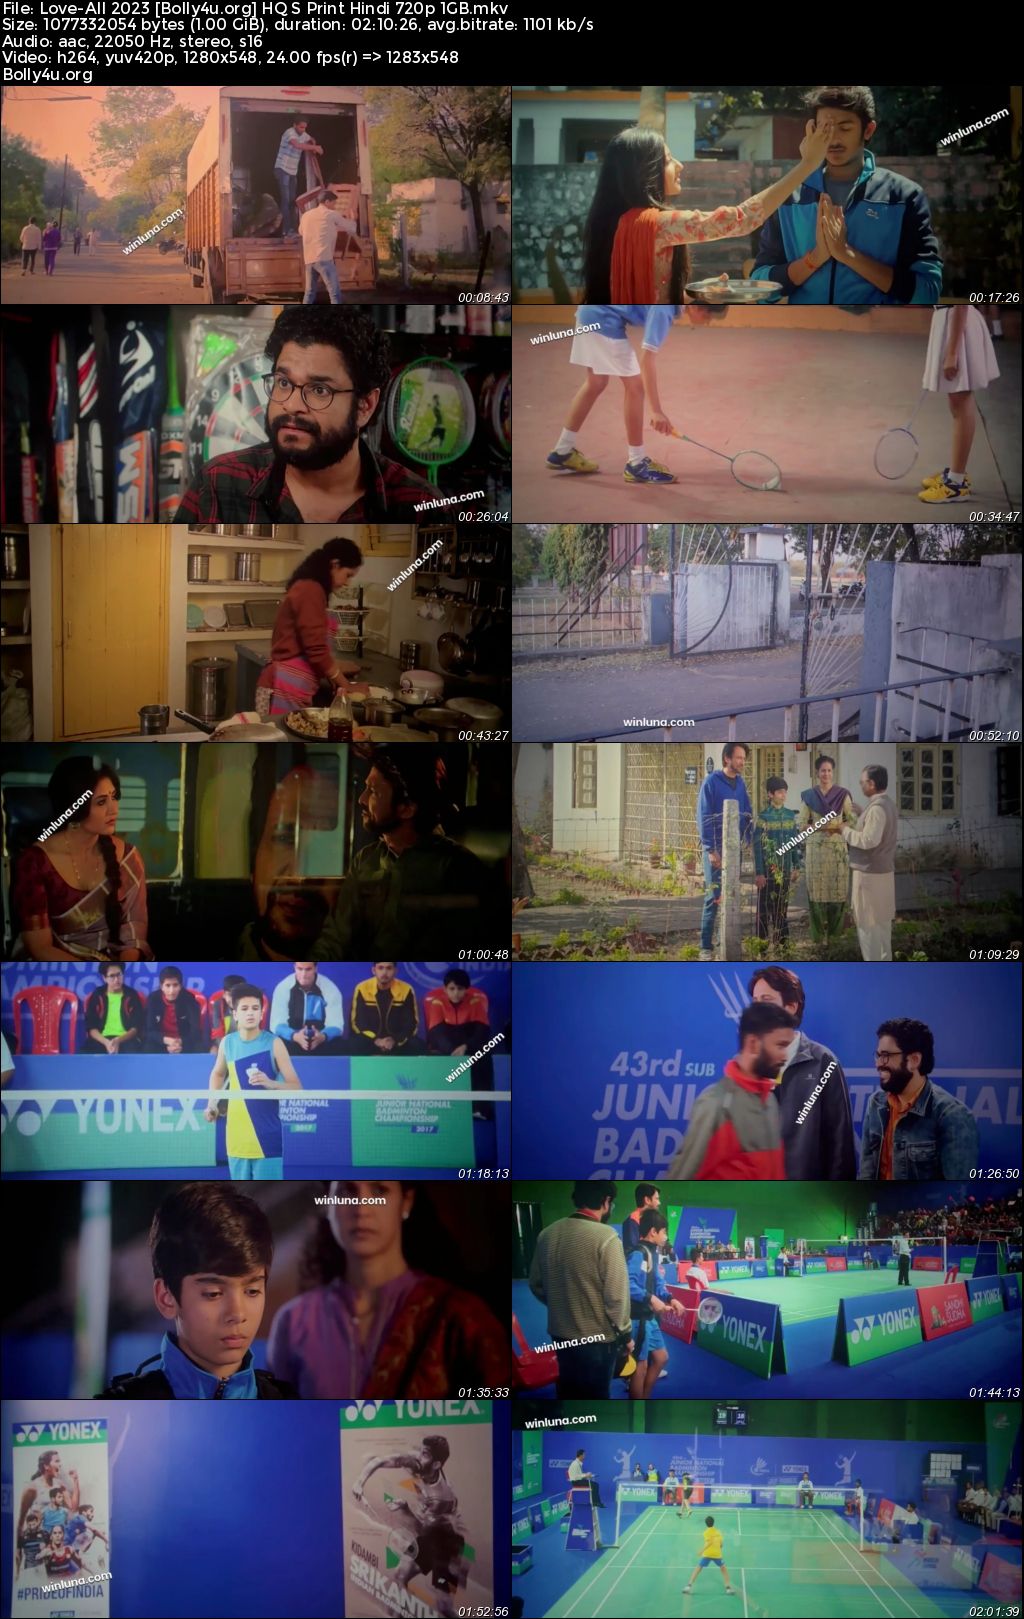 Love-All 2023 HQ S Print Hindi Full Movie Download 1080p 720p 480p